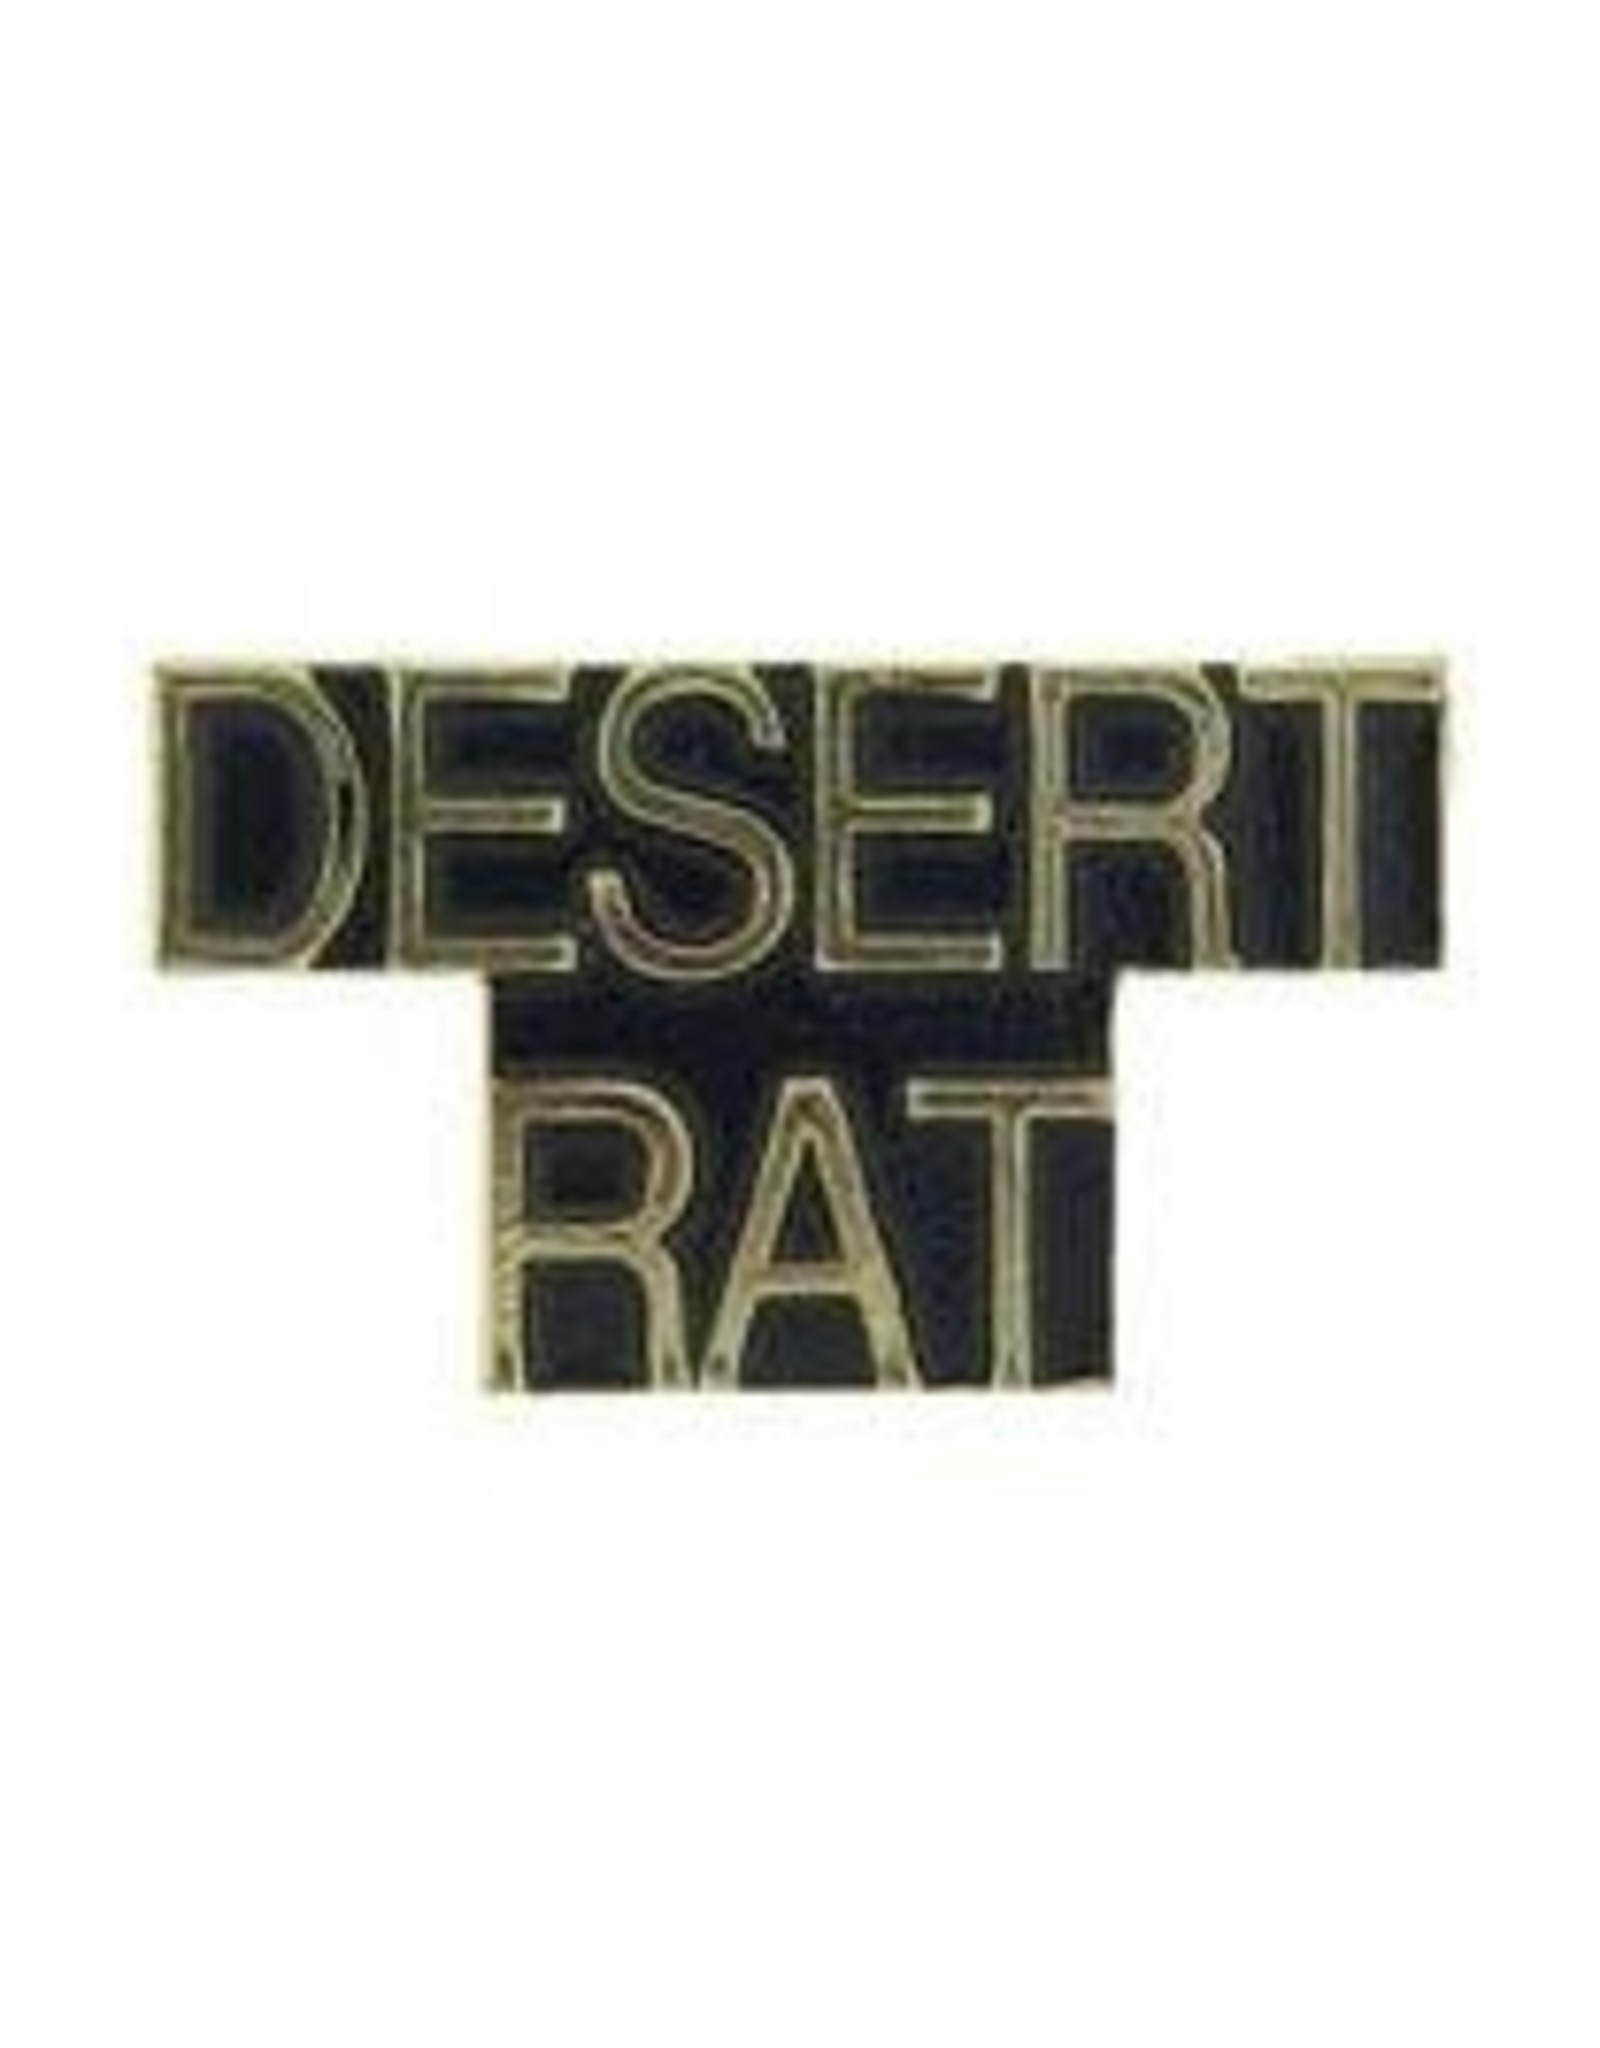 Pin - Desert Rat Scroll